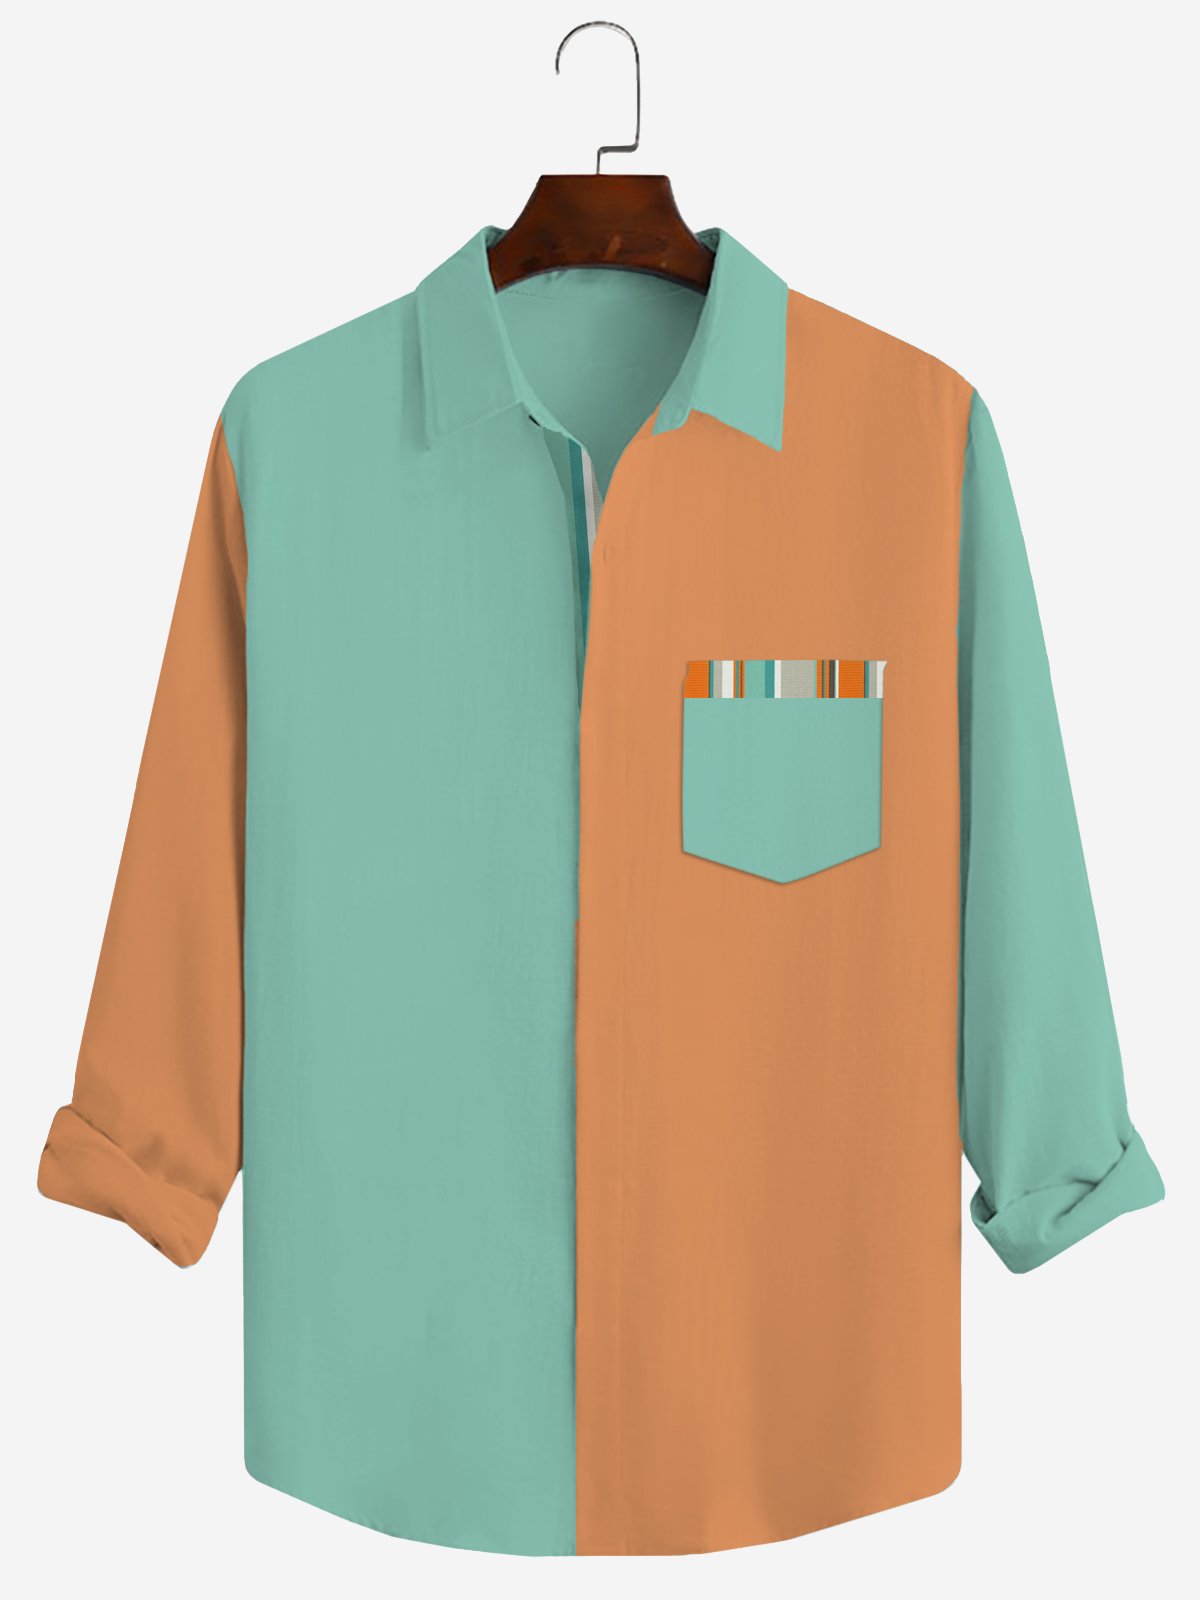 Royaura Men's Casual Contrast Long Sleeve Shirt